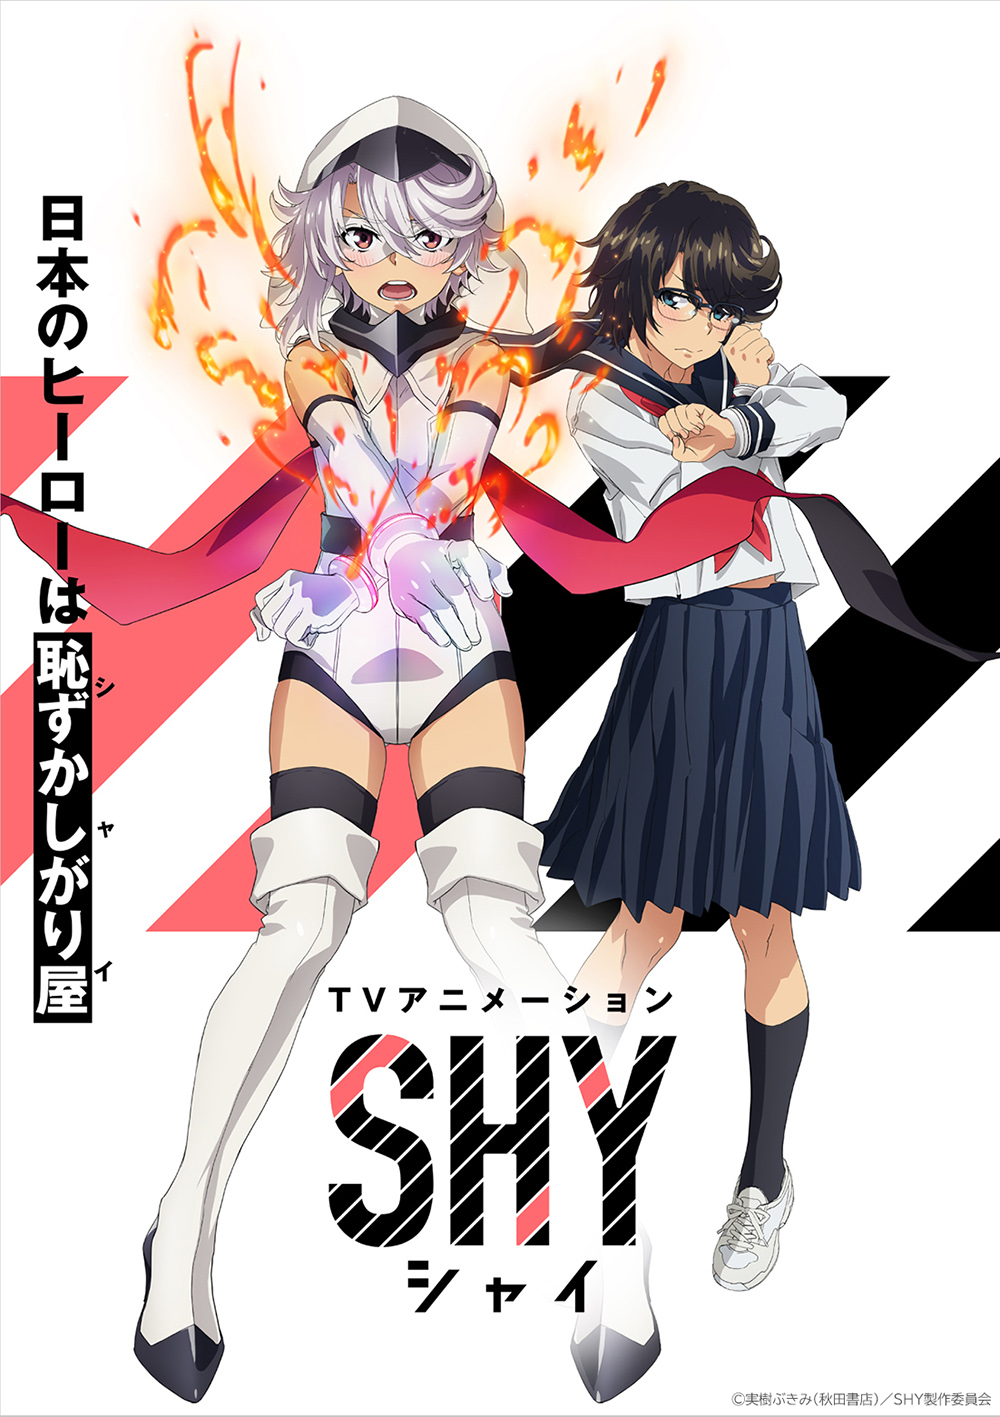 SHY Anime Announced, Teaser Trailer and Key Visual Revealed